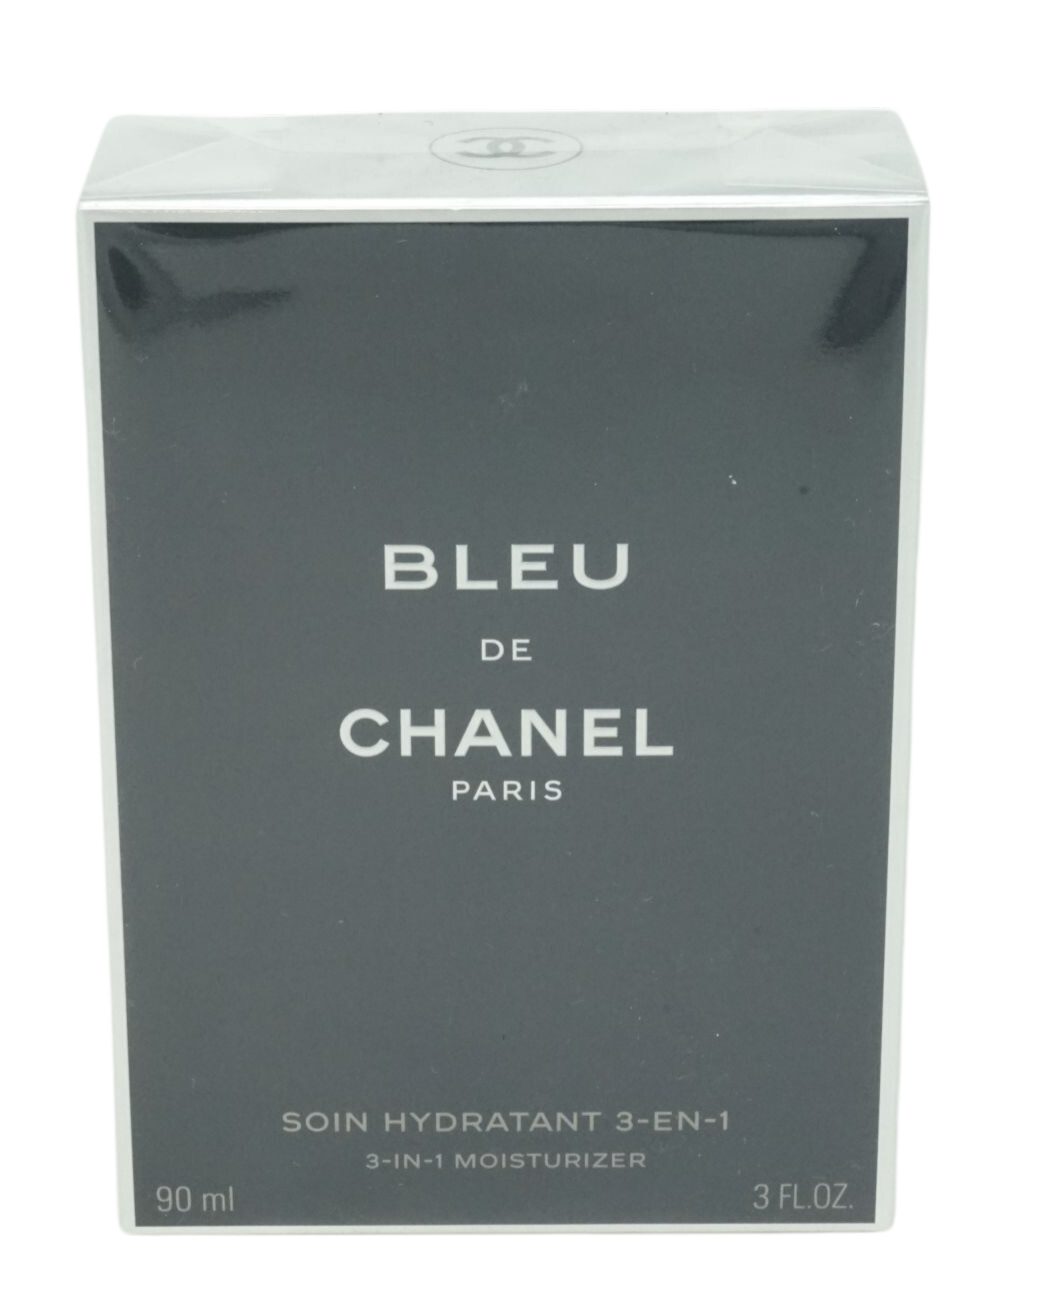 CHANEL Selbstbräunungstücher Chanel Bleu de Chanel 3 in 1 Moisturizer / Lotion 90ml